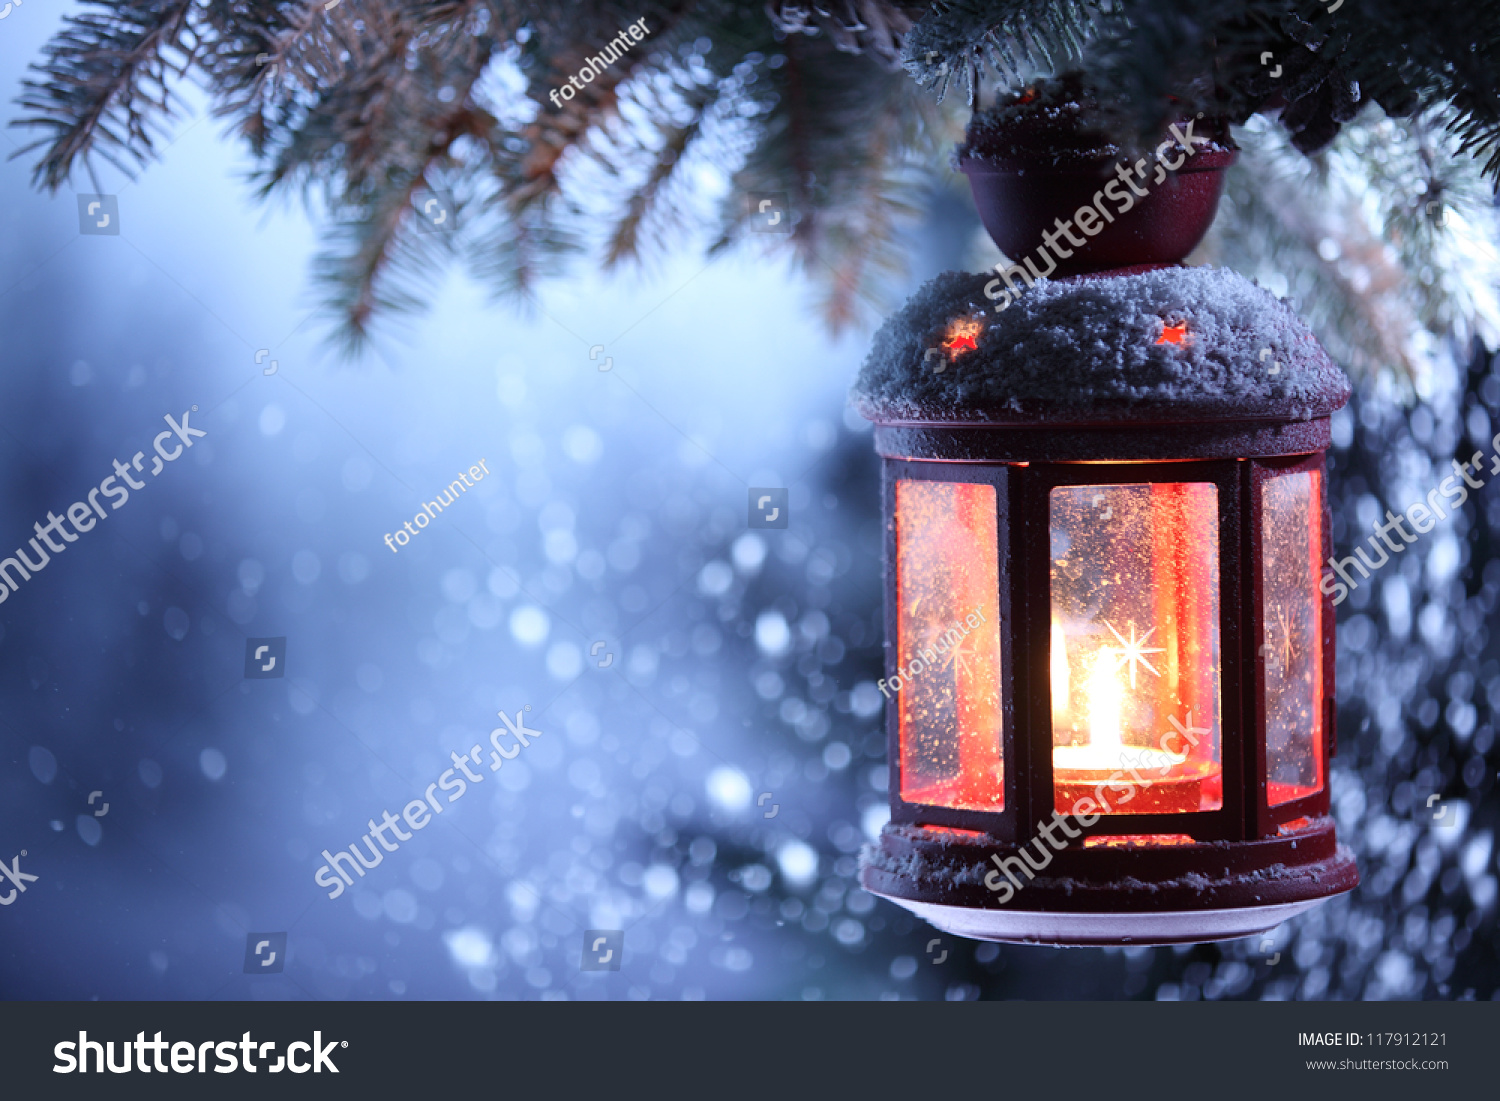 Christmas lantern with snowfall,Closeup. #117912121